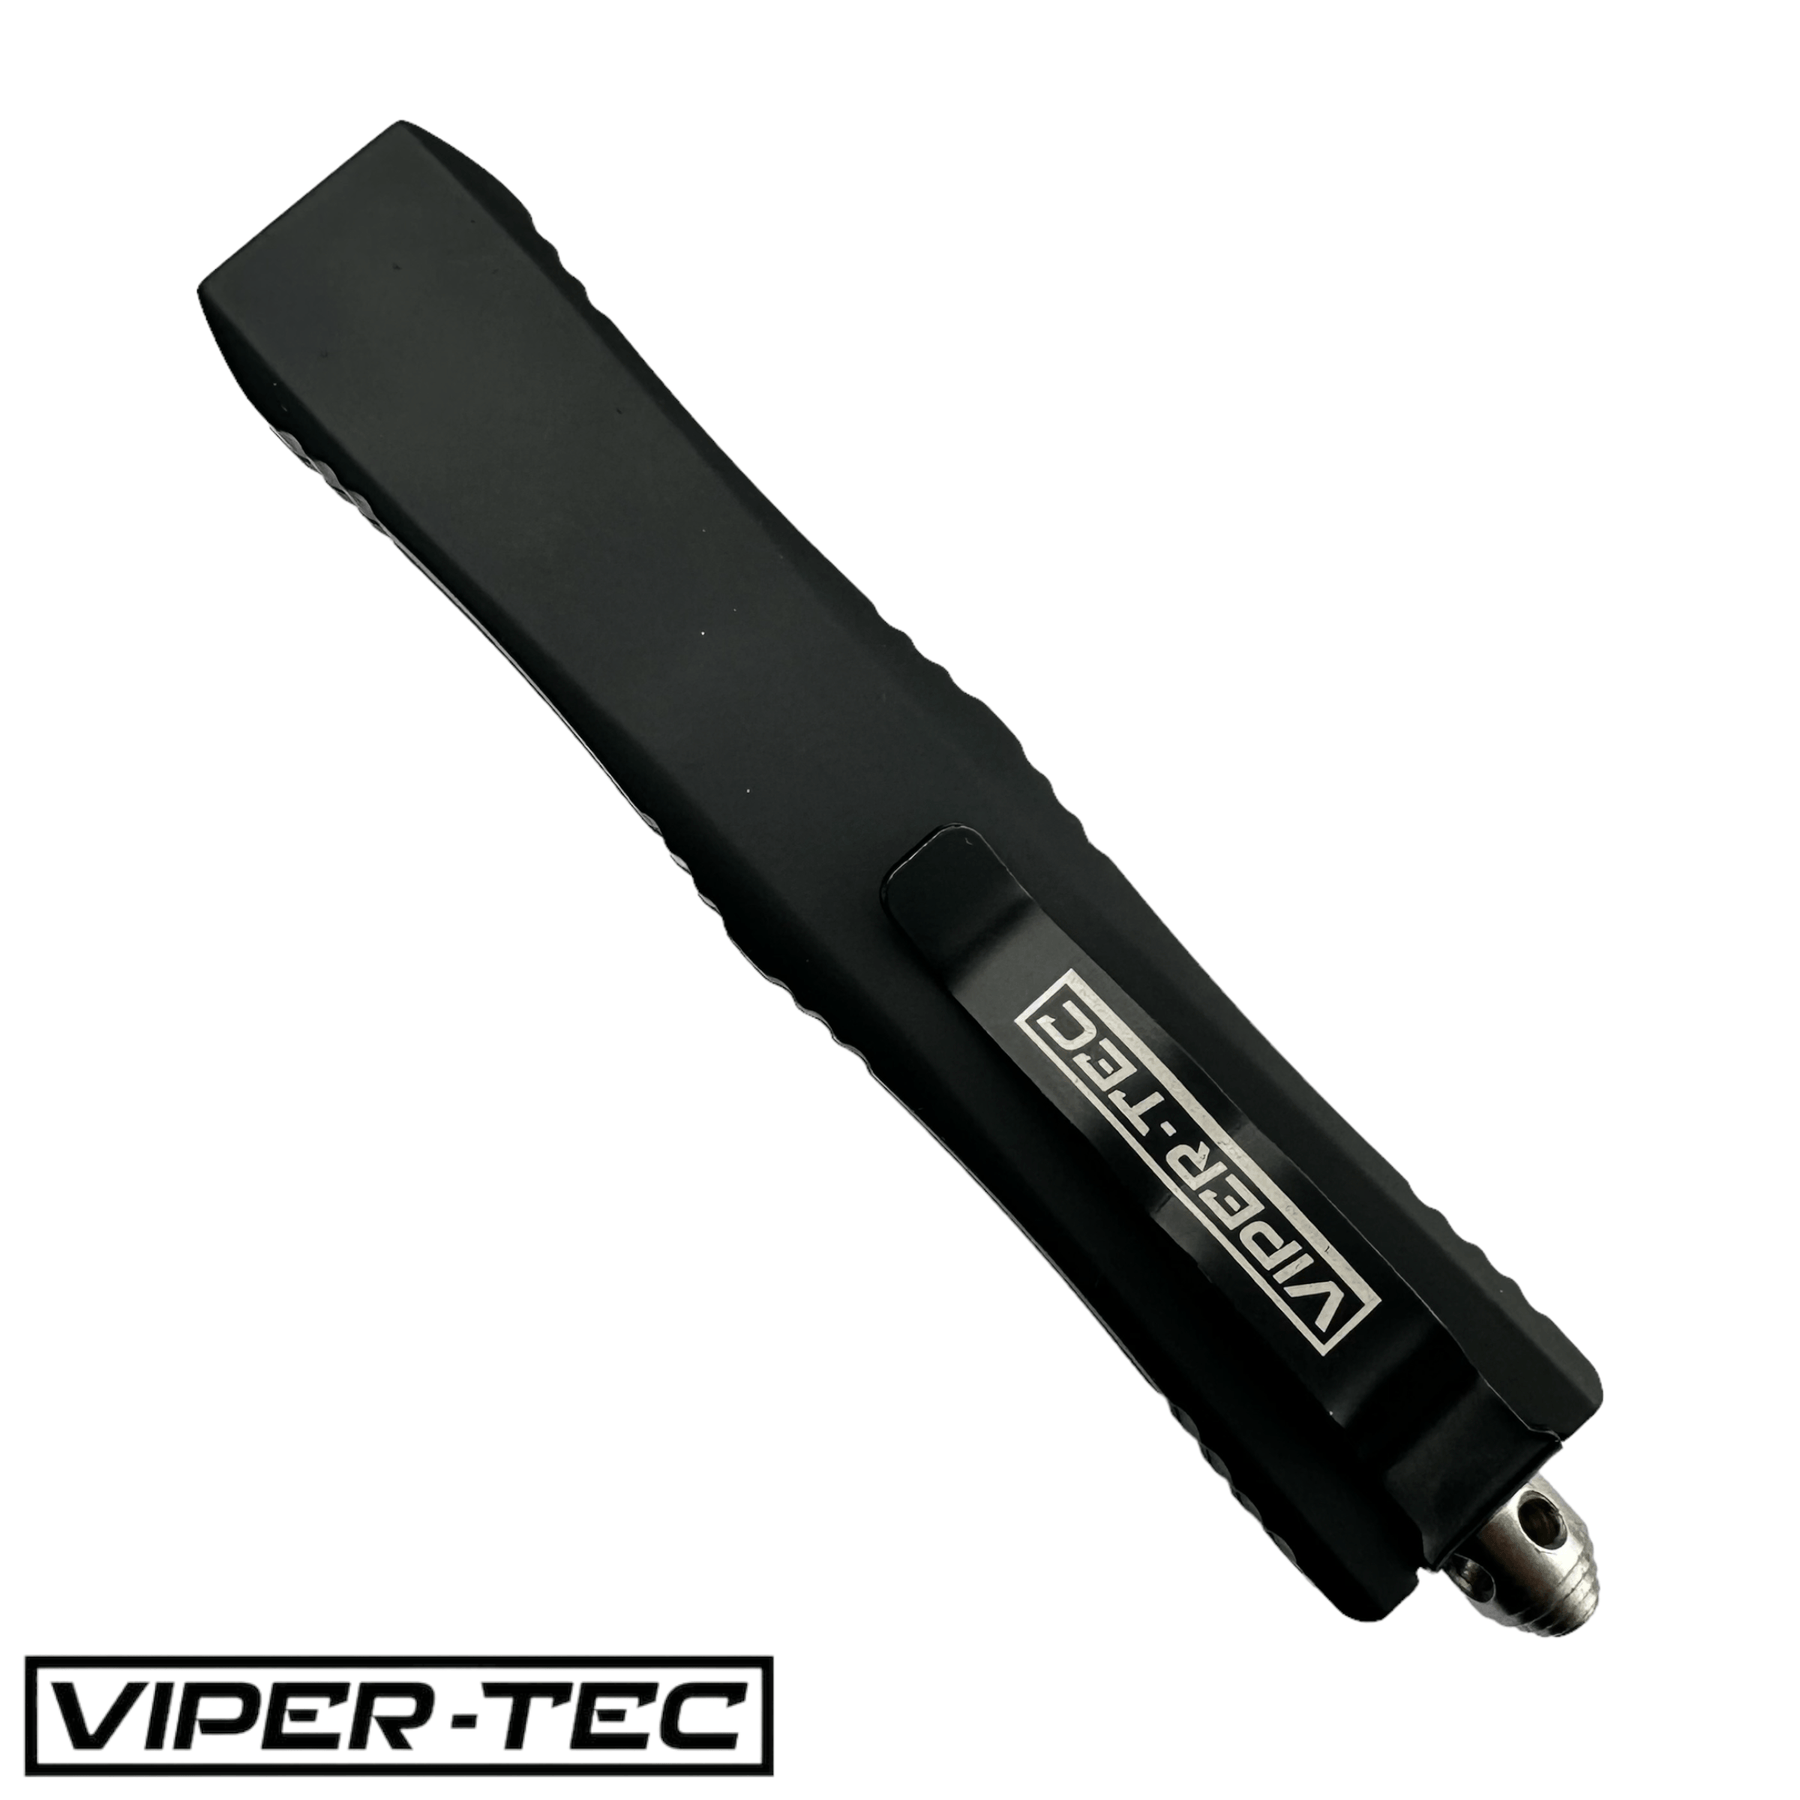 Viper-Tec OTF knife